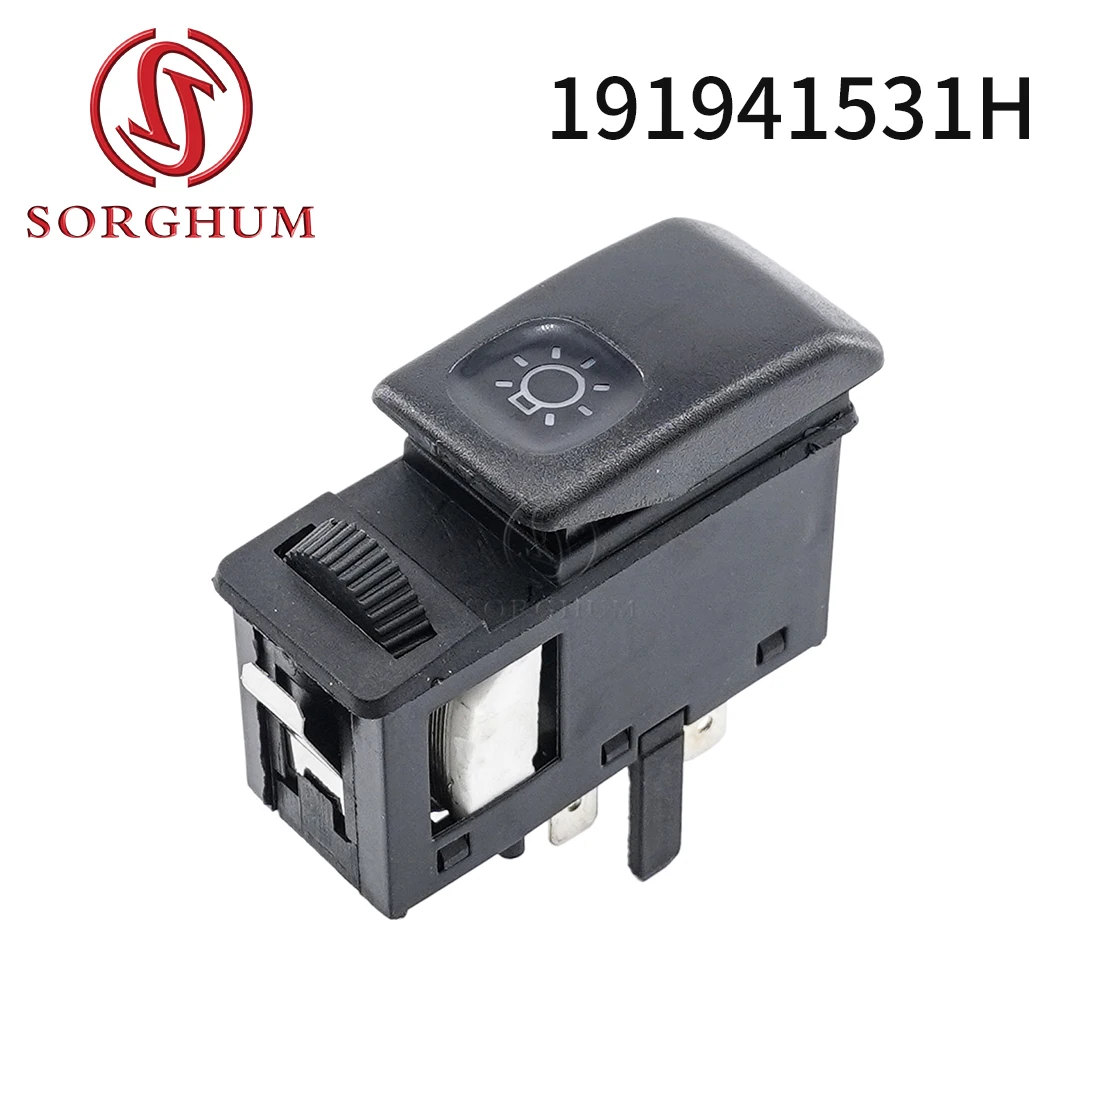 

Sorghum 191941531H Car Adjustment Headlight Fog Lamp Light Control Switch Knob For Volkswagen VW Jetta Mk2 Golf II MK 1983-1992